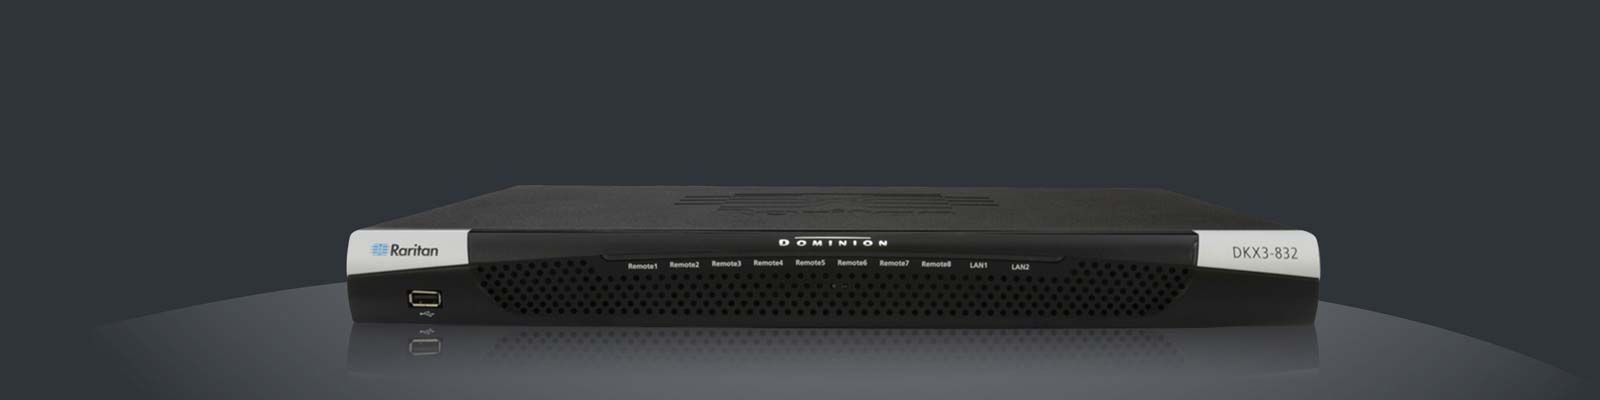 Raritan Dominion DKX3 Dual-Monitor VGA KVM Over IP Switch - Virtual Media, Military grade security